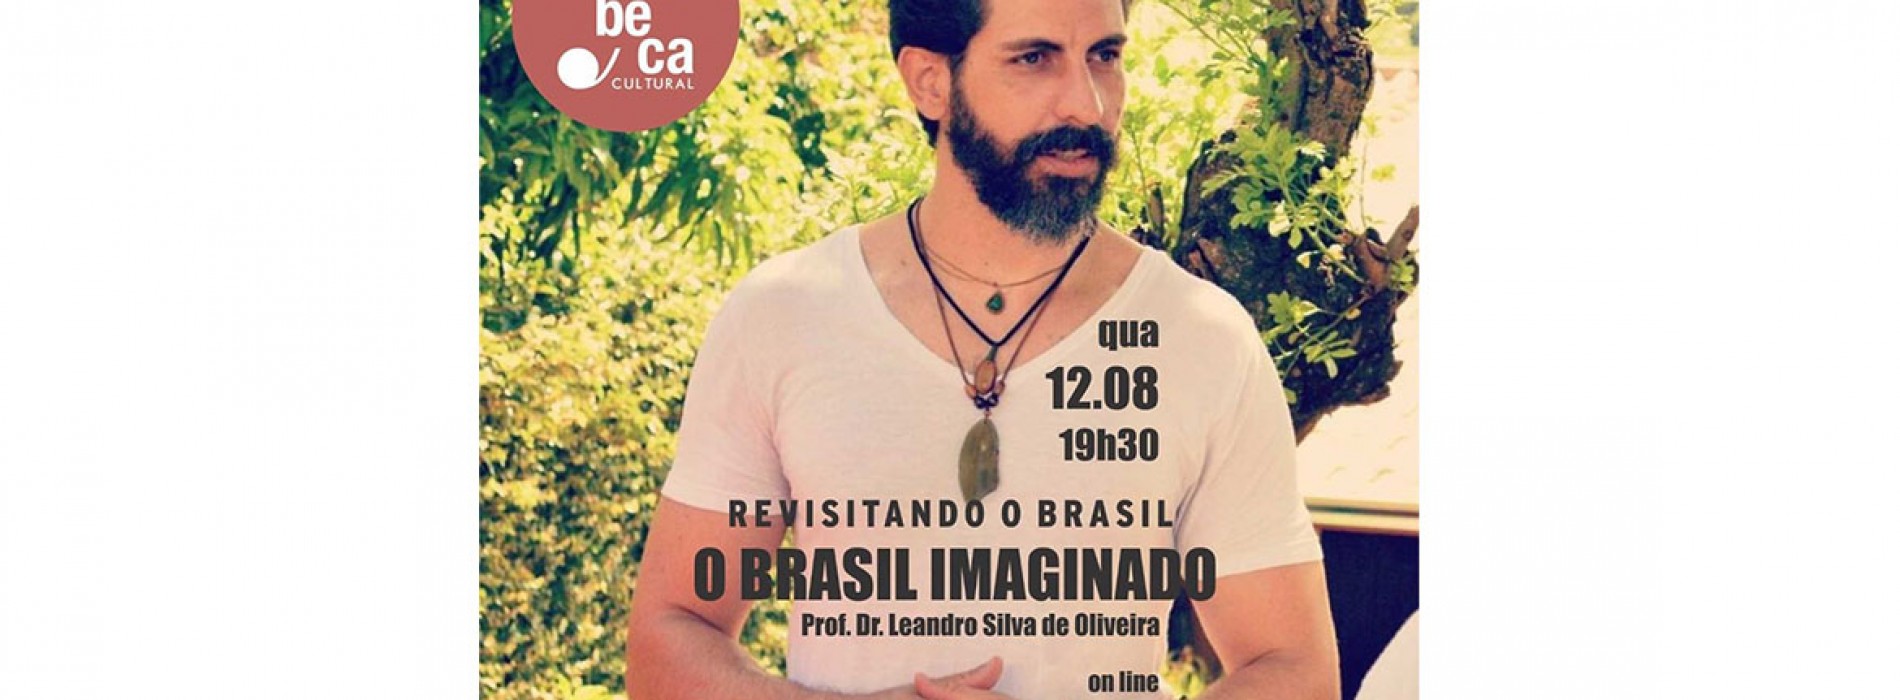 Rabeca Cultural convida para a videoconferência “O Brasil Imaginado”